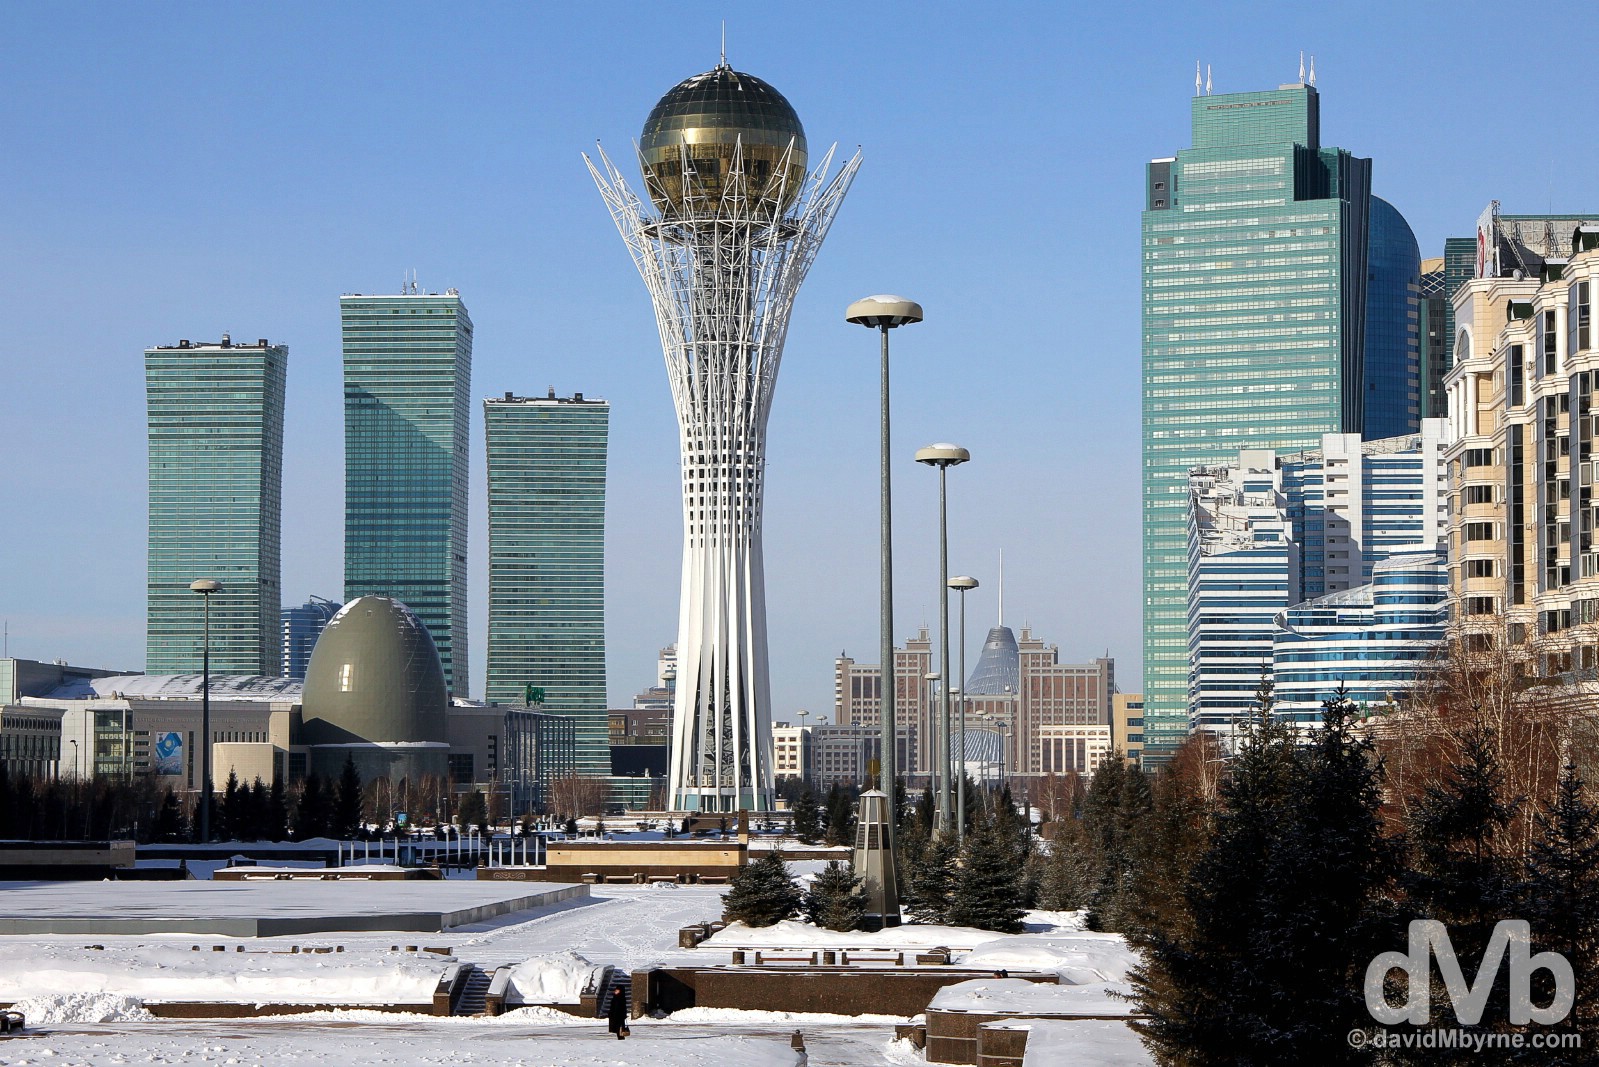 Looking west up Nurzhol Bulvar, the 2 kilometer long governmental & monumental zone in Astana, Kazakhstan. February 18, 2015.